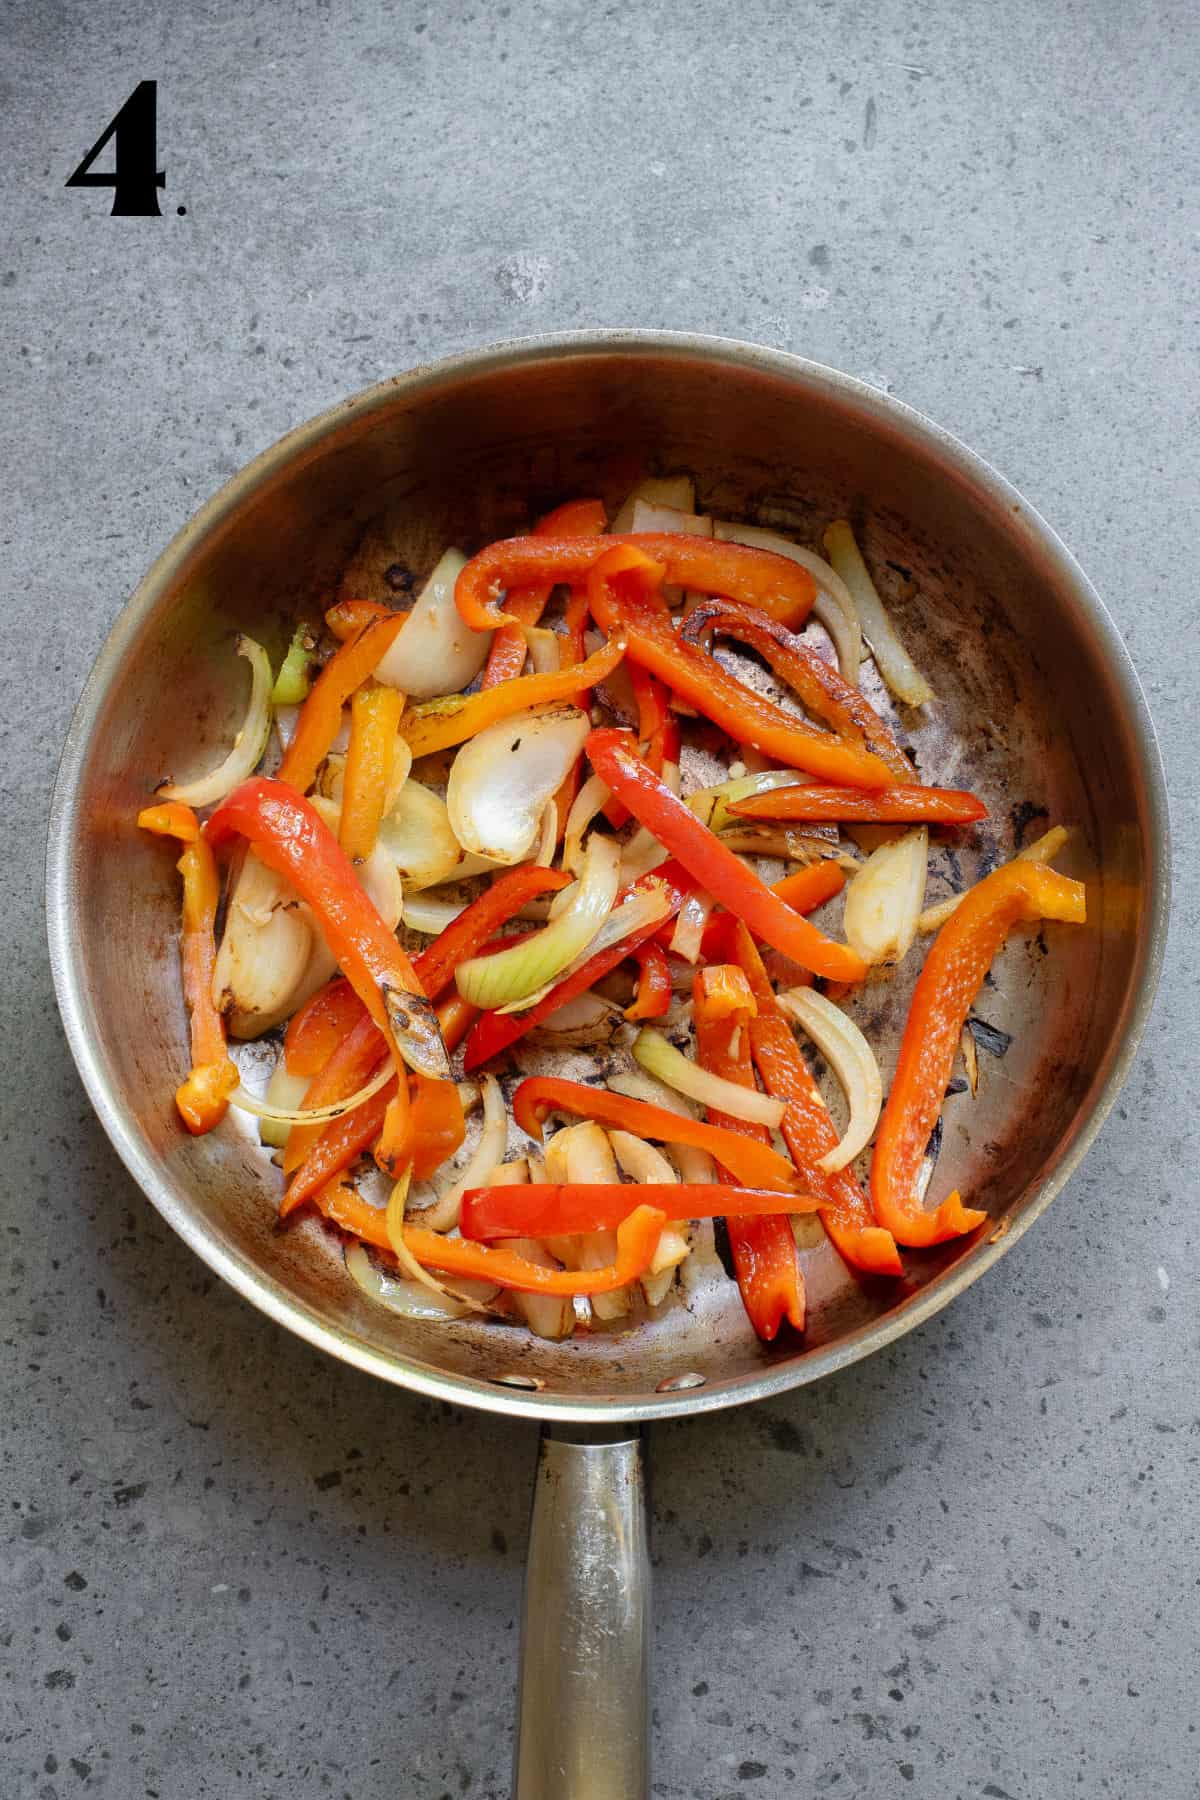 How to Make Black Pepper Chicken - Step 4 - stir fry vegetables in pan.